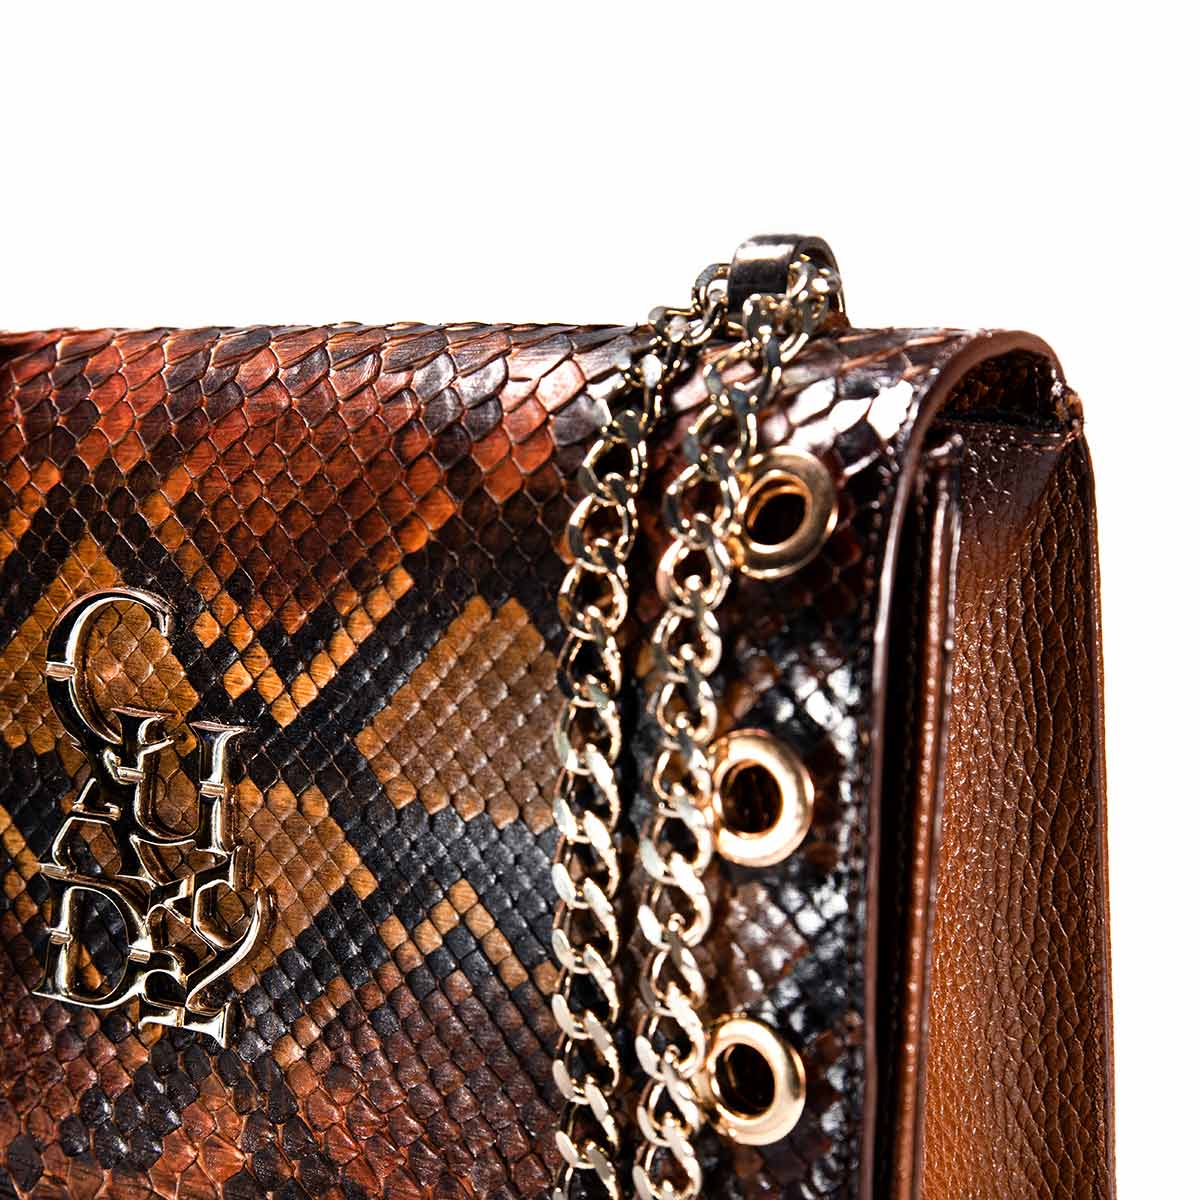 BOD53PI - Cuadra brown western casual leather python shoulder bag for women.-Kuet.us